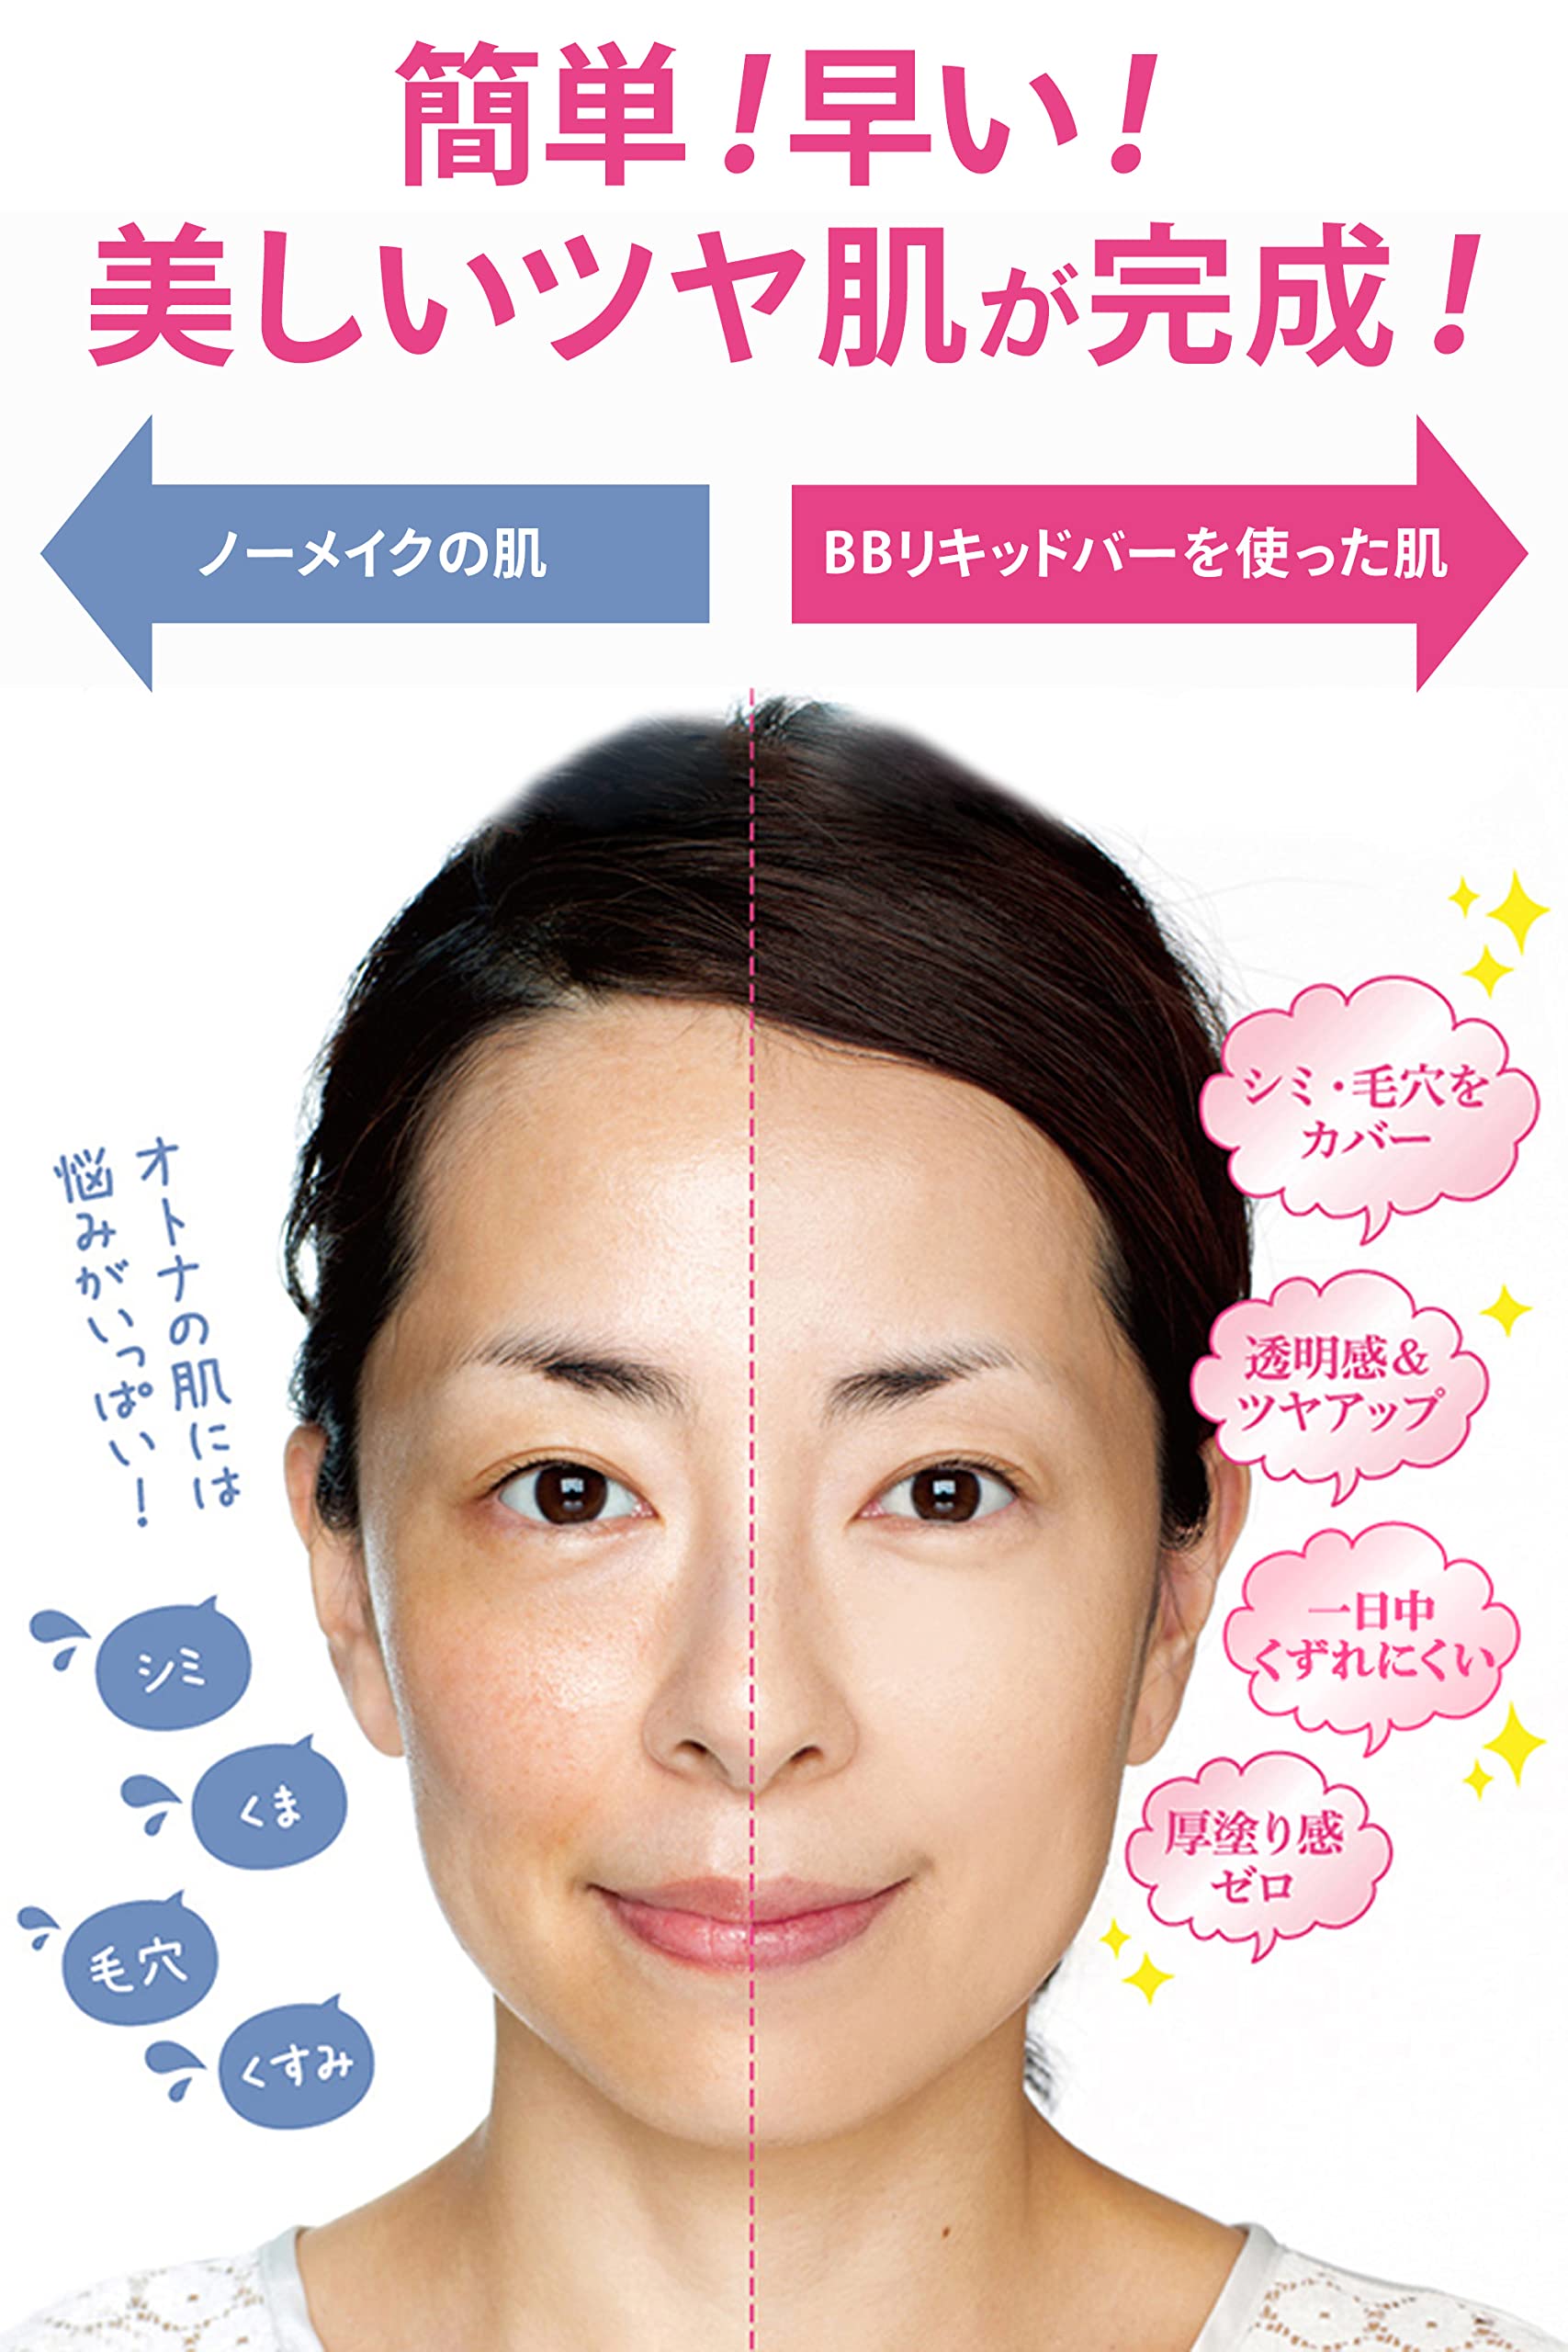 Shiseido Aqua Label White Protect Milk Uv Spf30 Pa++ 50ml - Japanese Milk Sunscreen Lotion